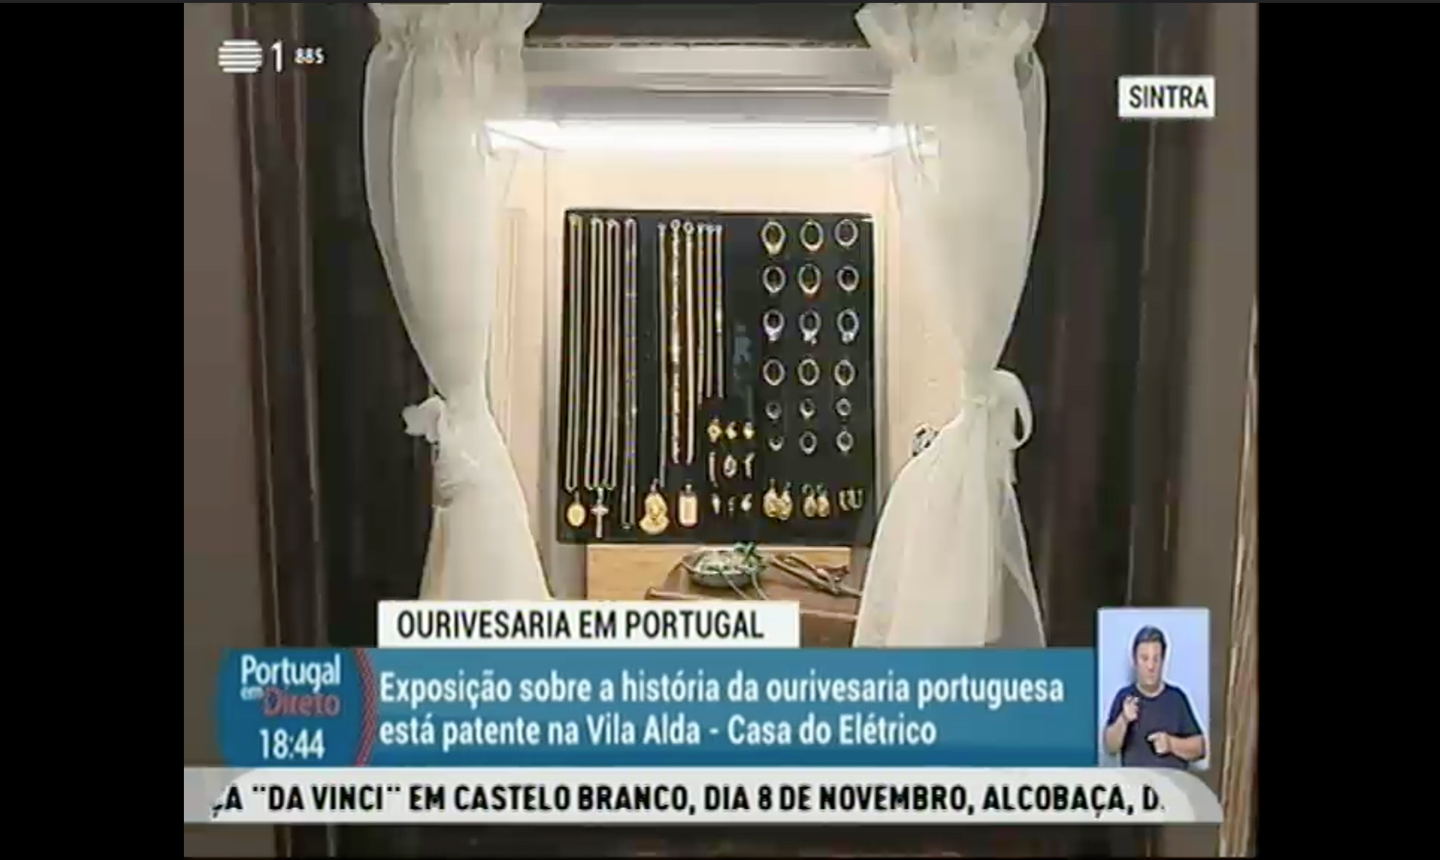 PORTUGAL EM DIRETO TV PROGRAM ON RTP TELEVISION NETWORK